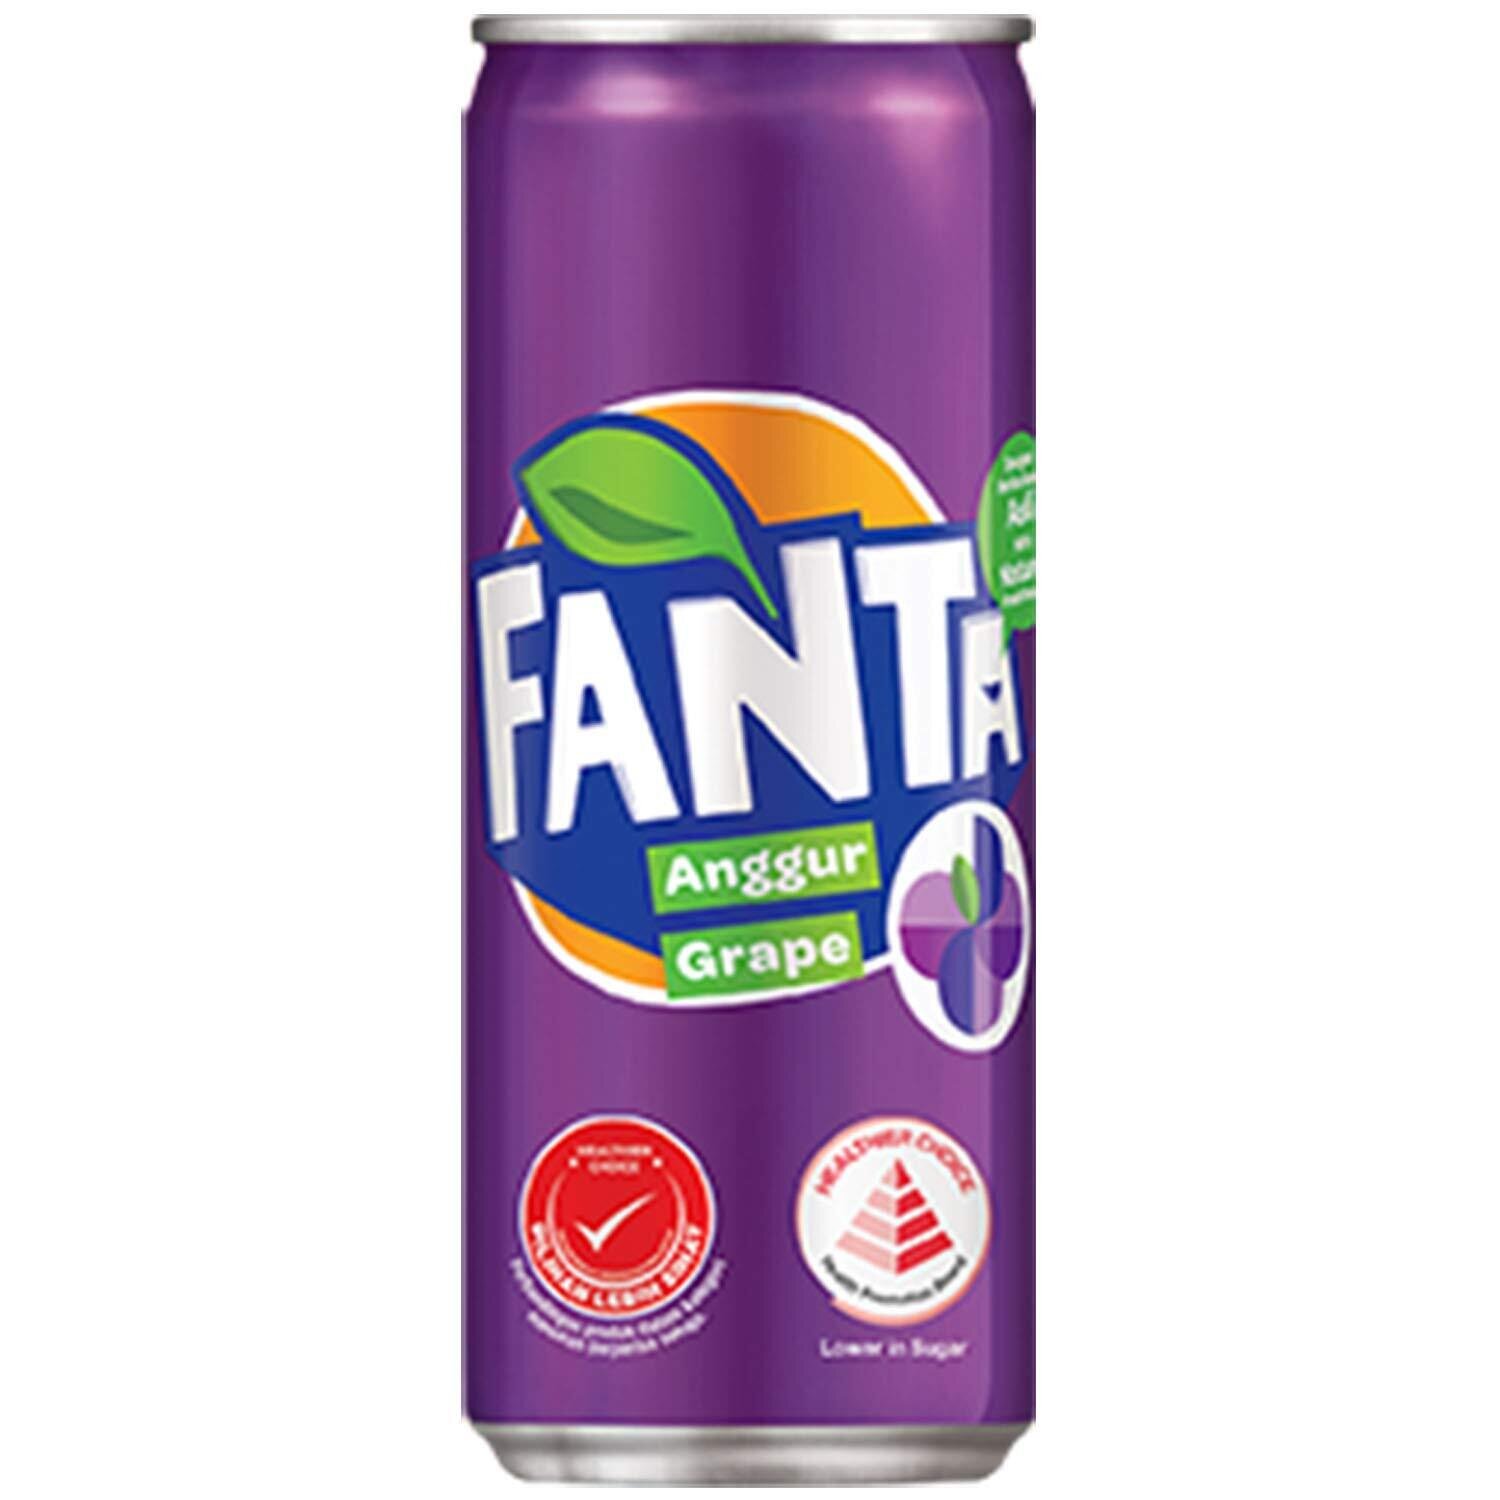 Fanta Anggur (Grape) Drink 320ml